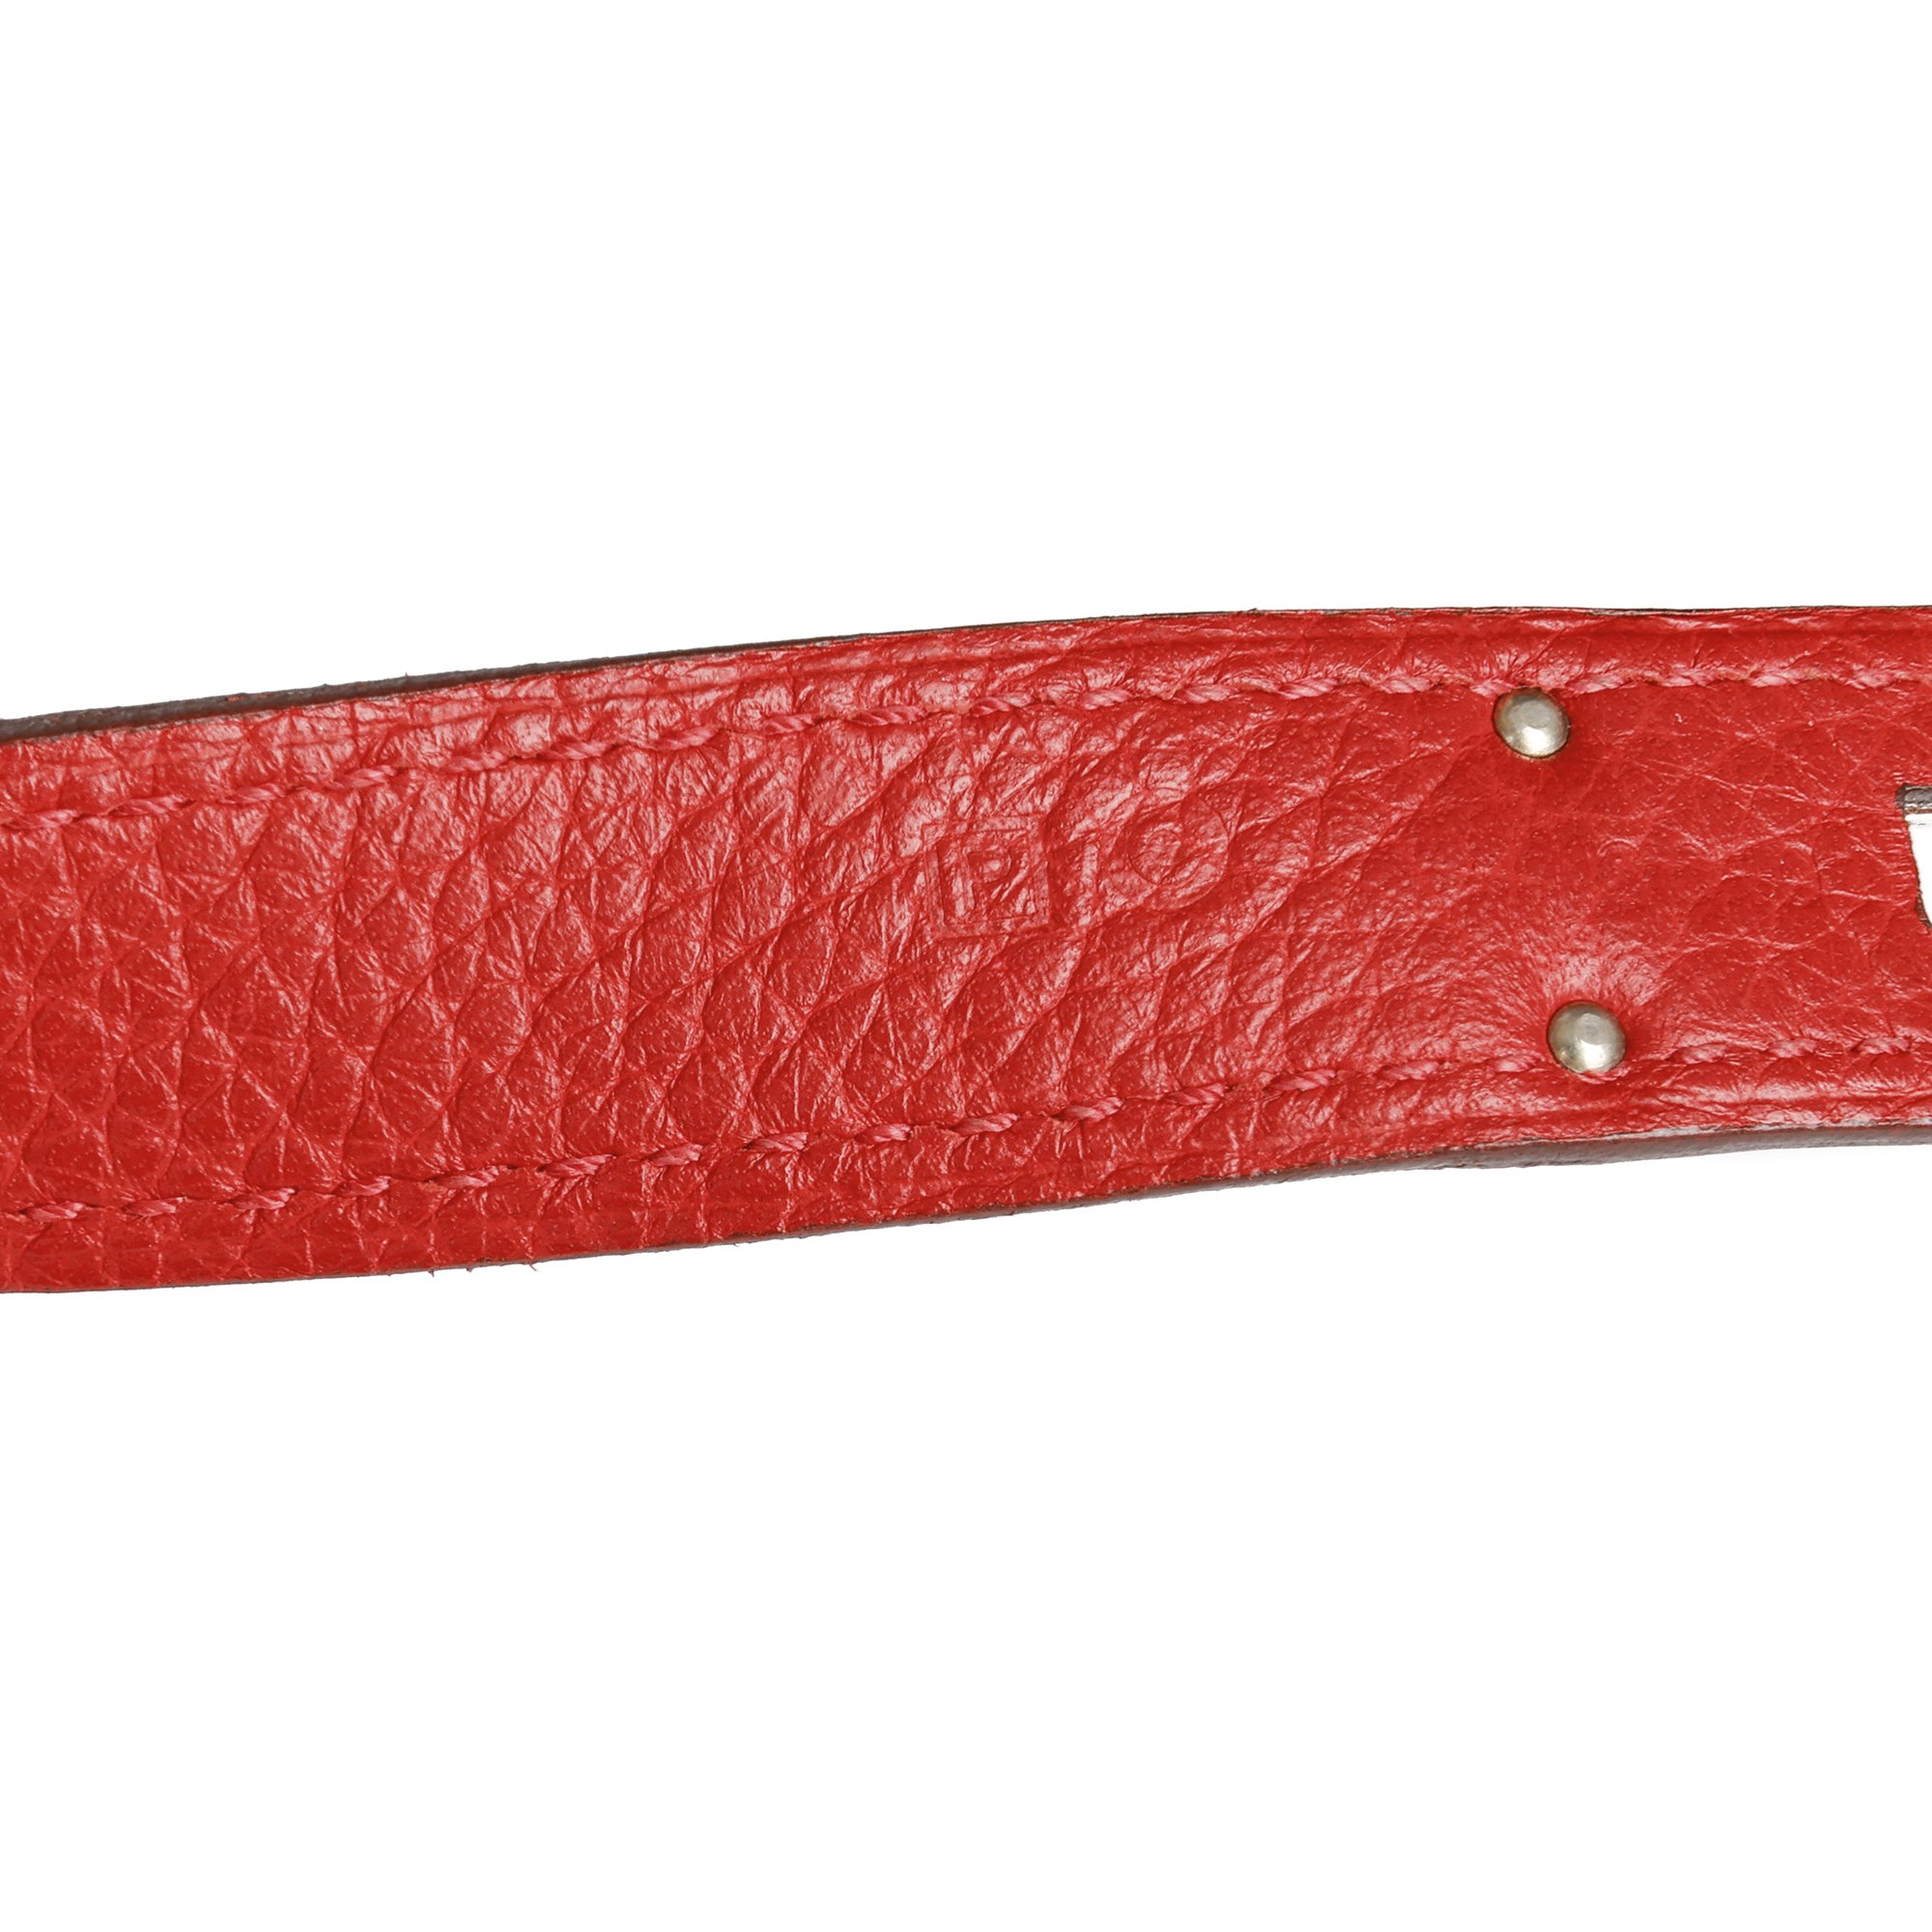 Hermès Rouge Casaque Togo Leather Amazone Kelly 35cm Retourne